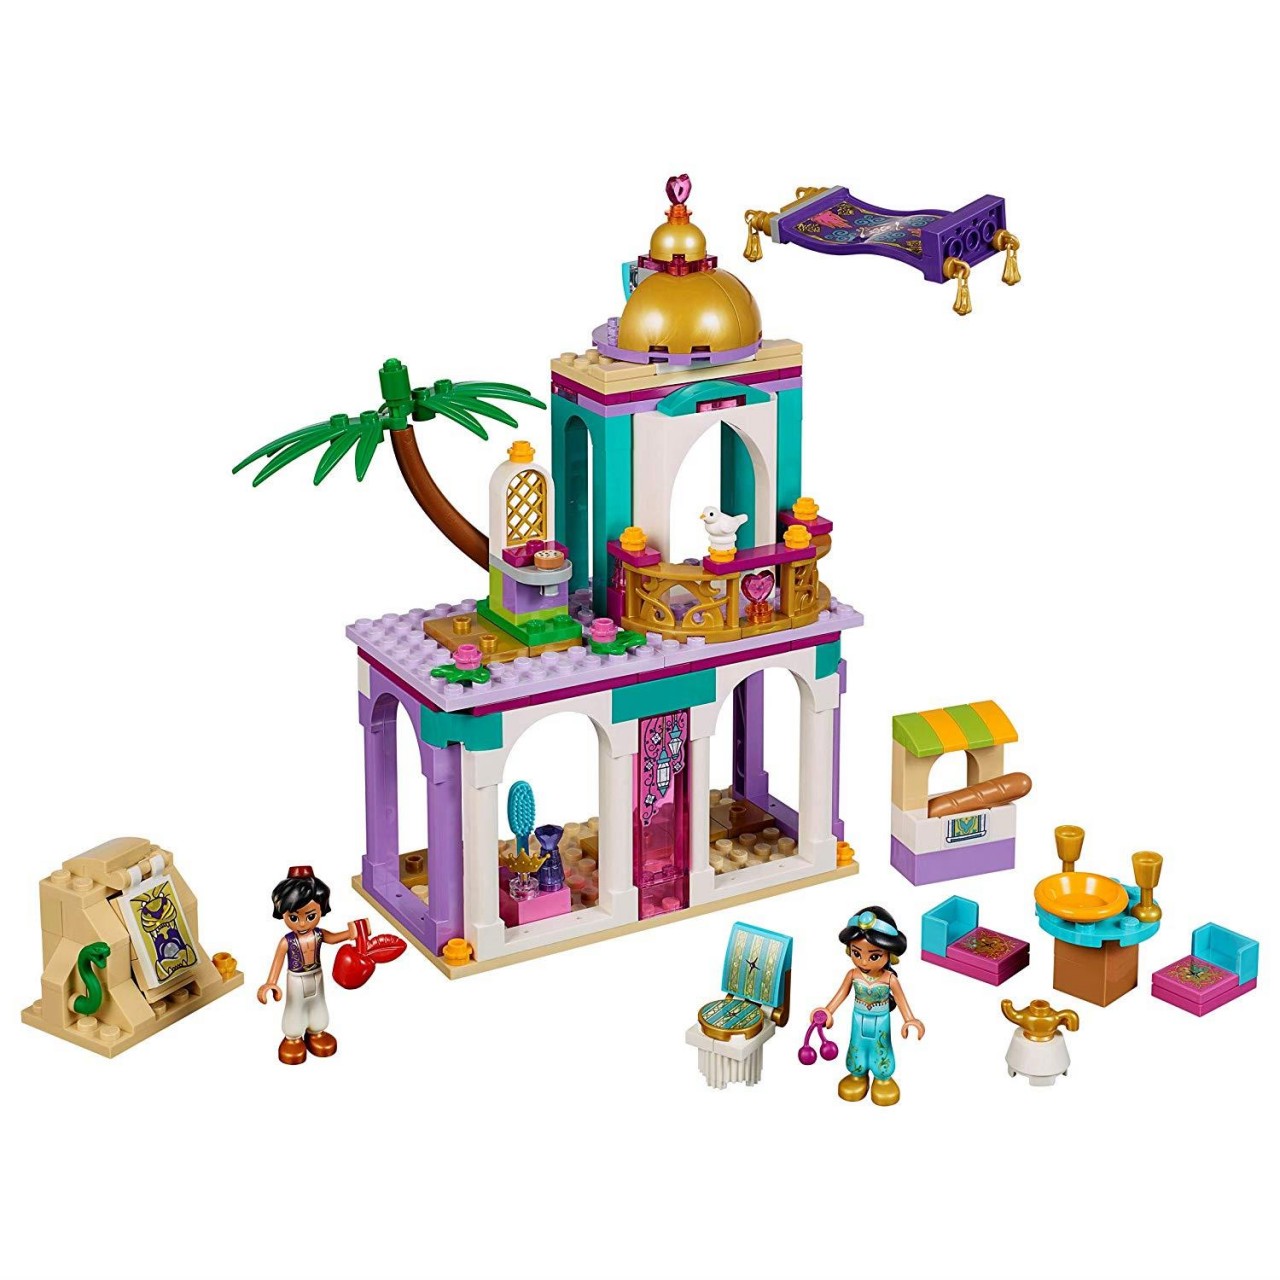 LEGO DISNEY 41161 Aladdins und Jasmins Palastabenteuer